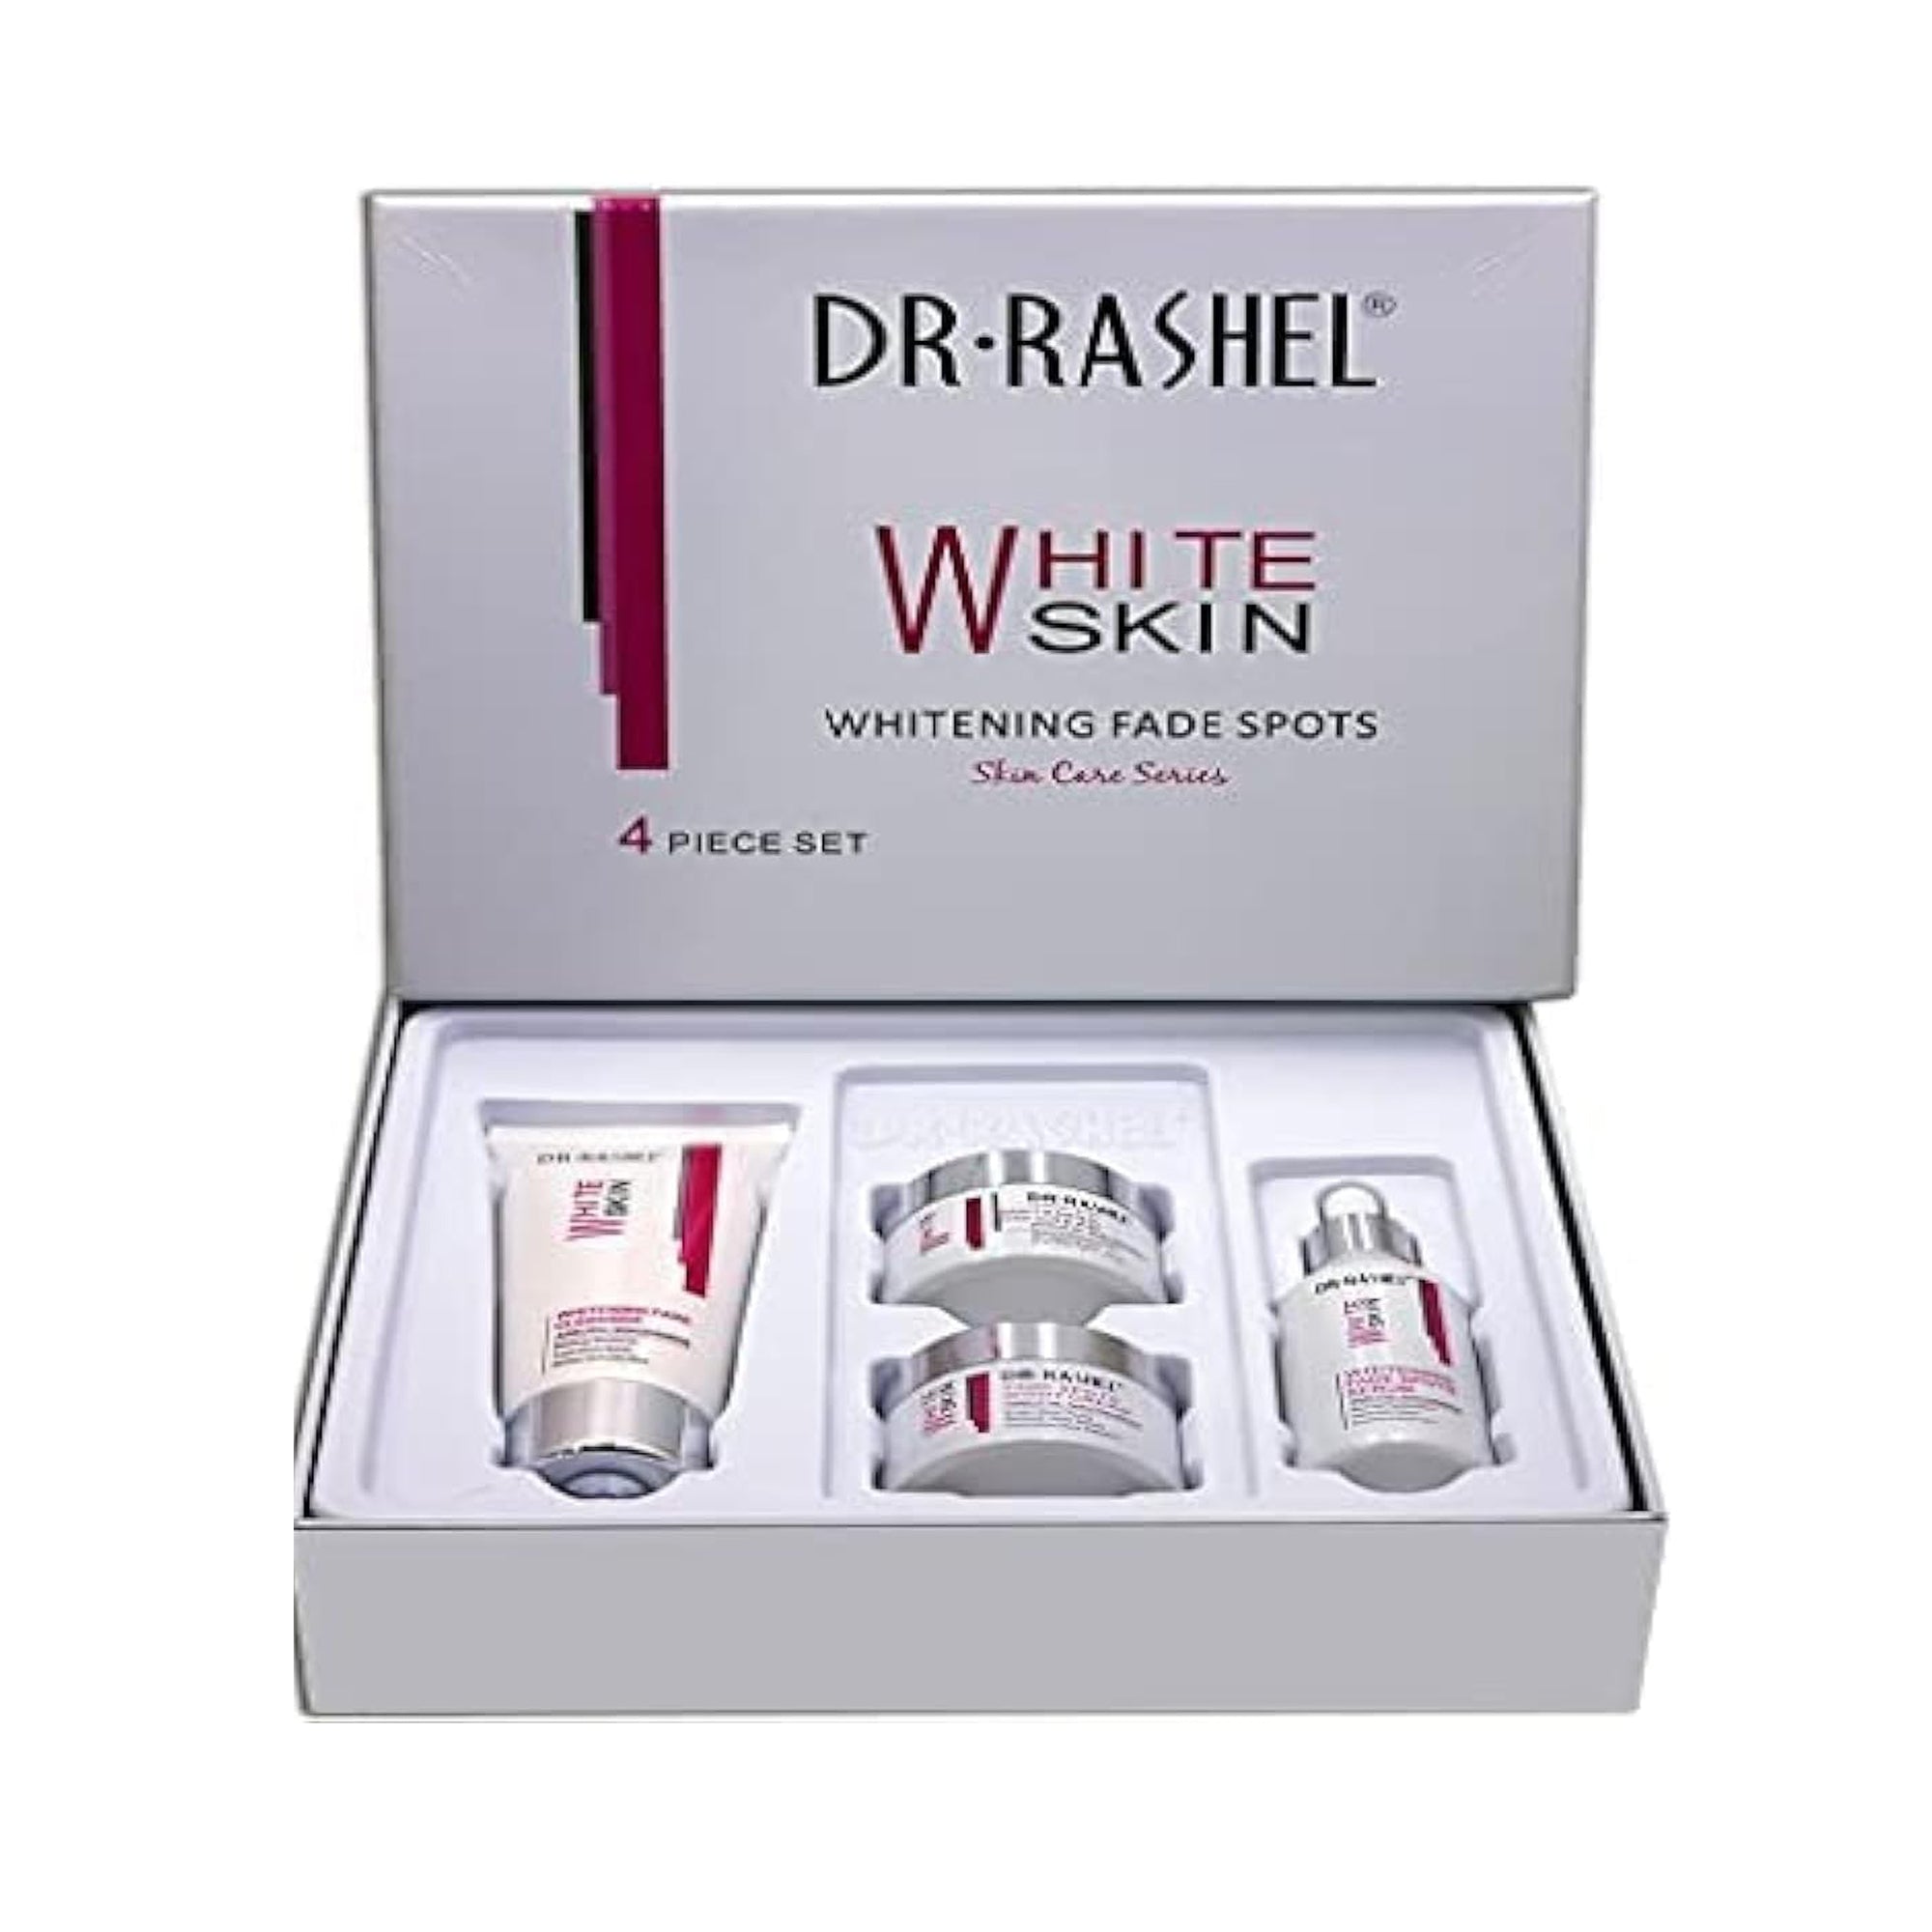 Dr-Rashel Whitening Fade Series Kit